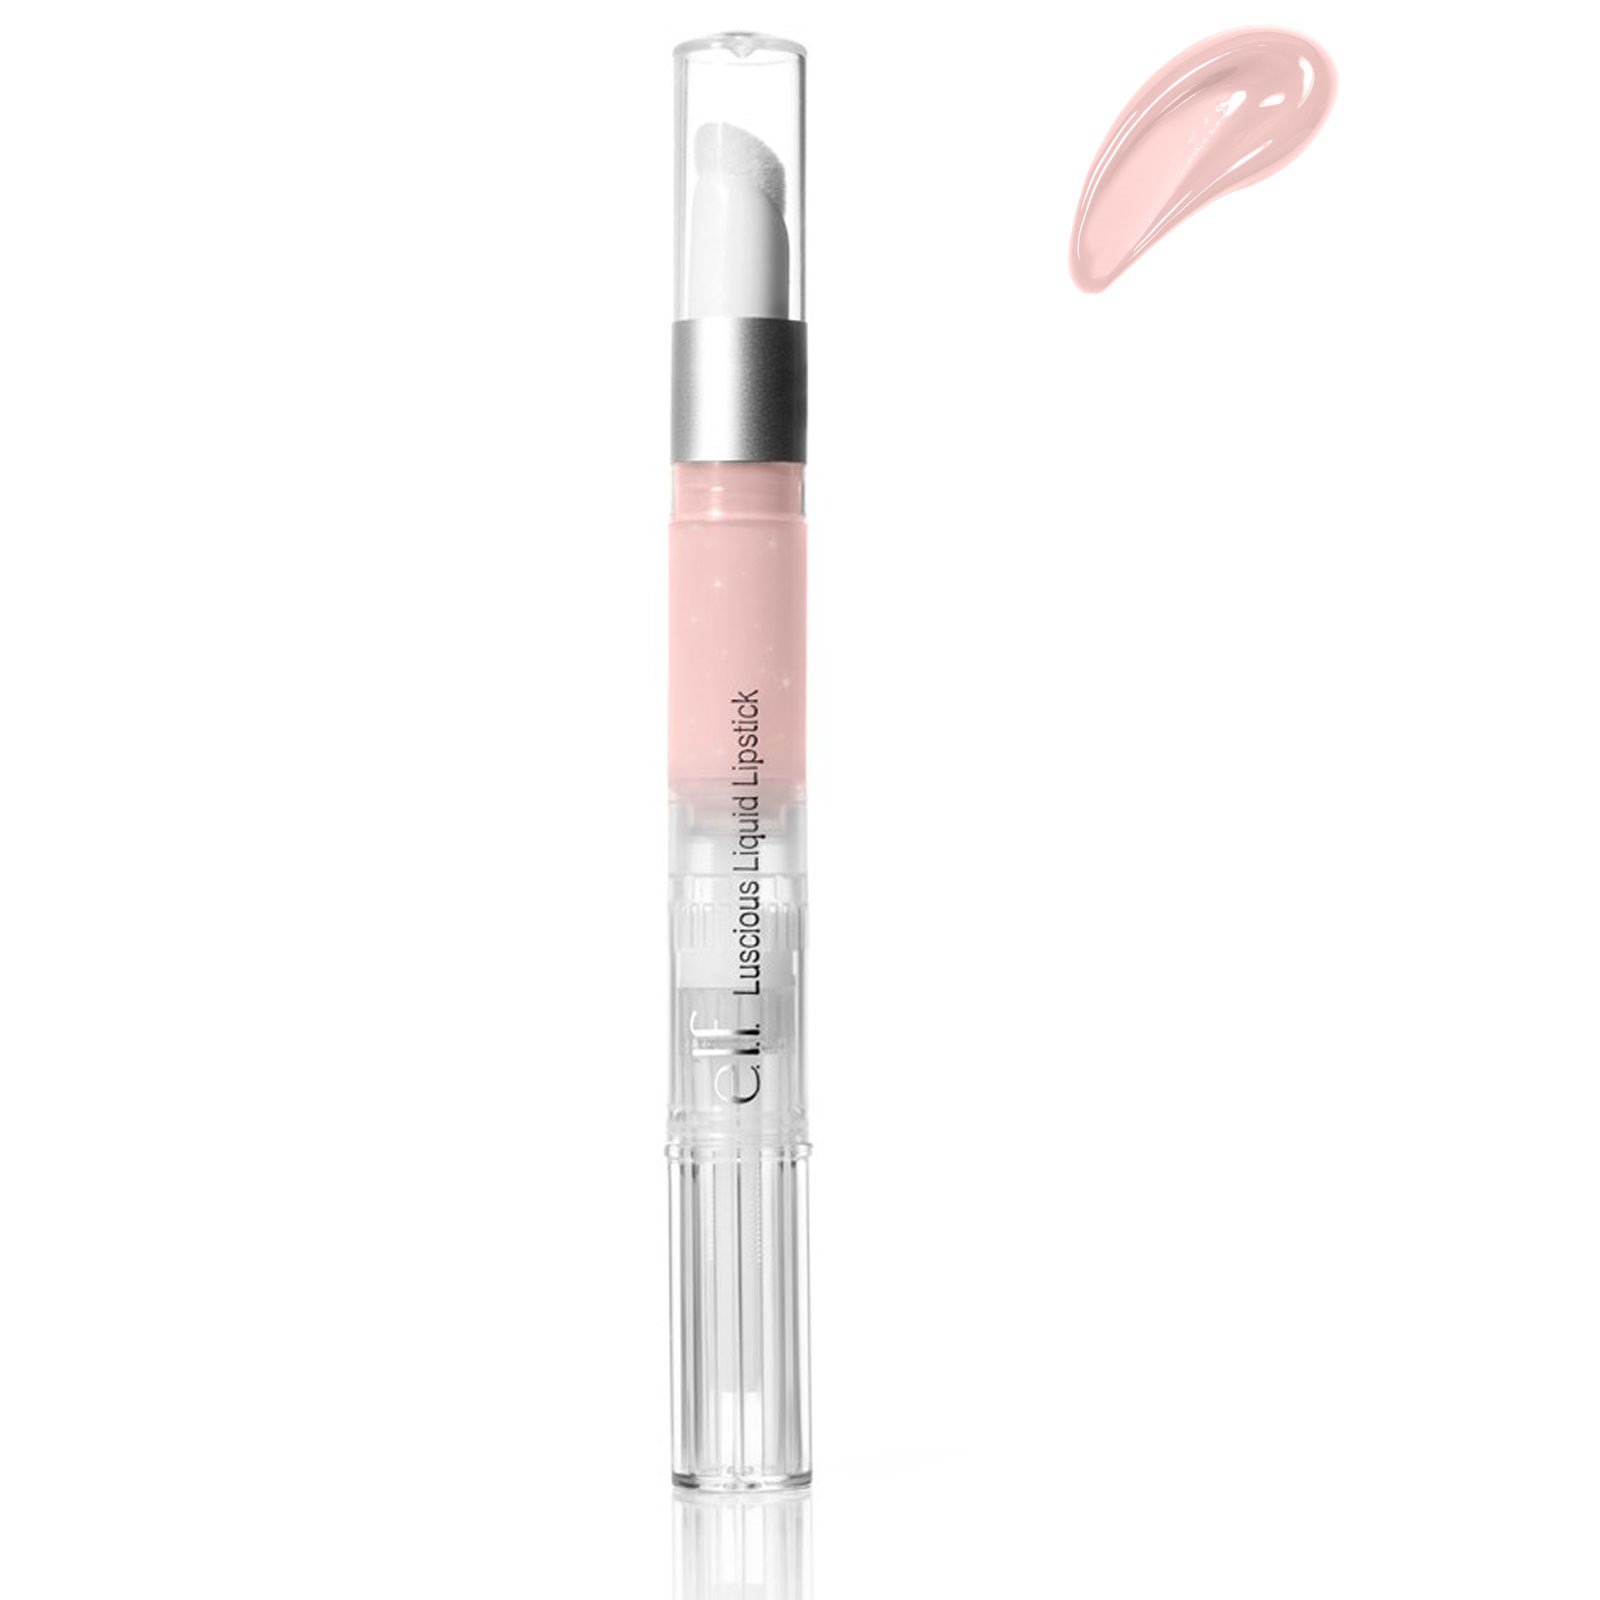 E.L.F., Luscious Liquid Lipstick, Nude Pink, 0.05 oz (1.5 g) - iHerb